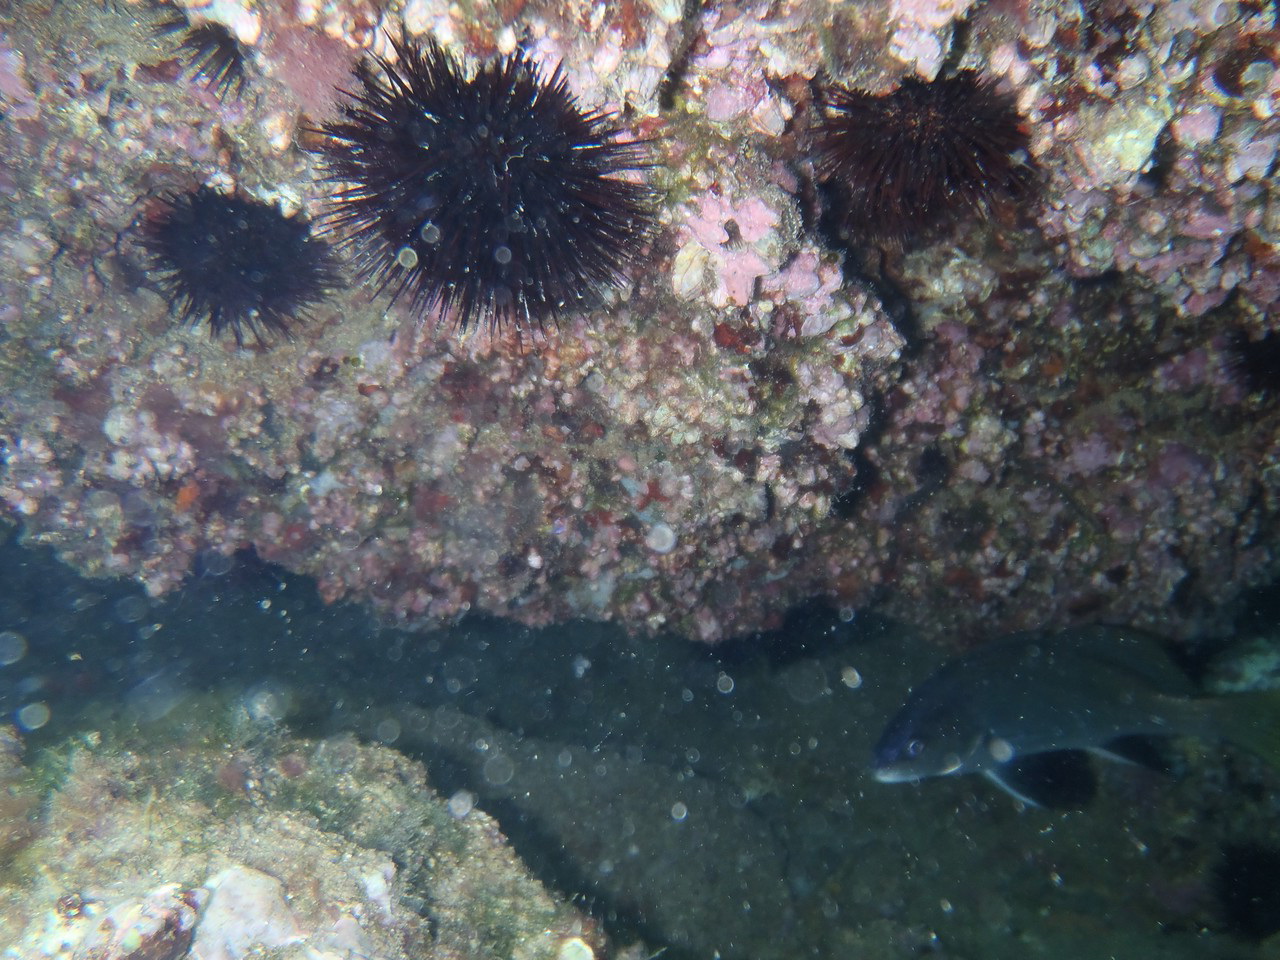 a sea urchin swimming among the reefs